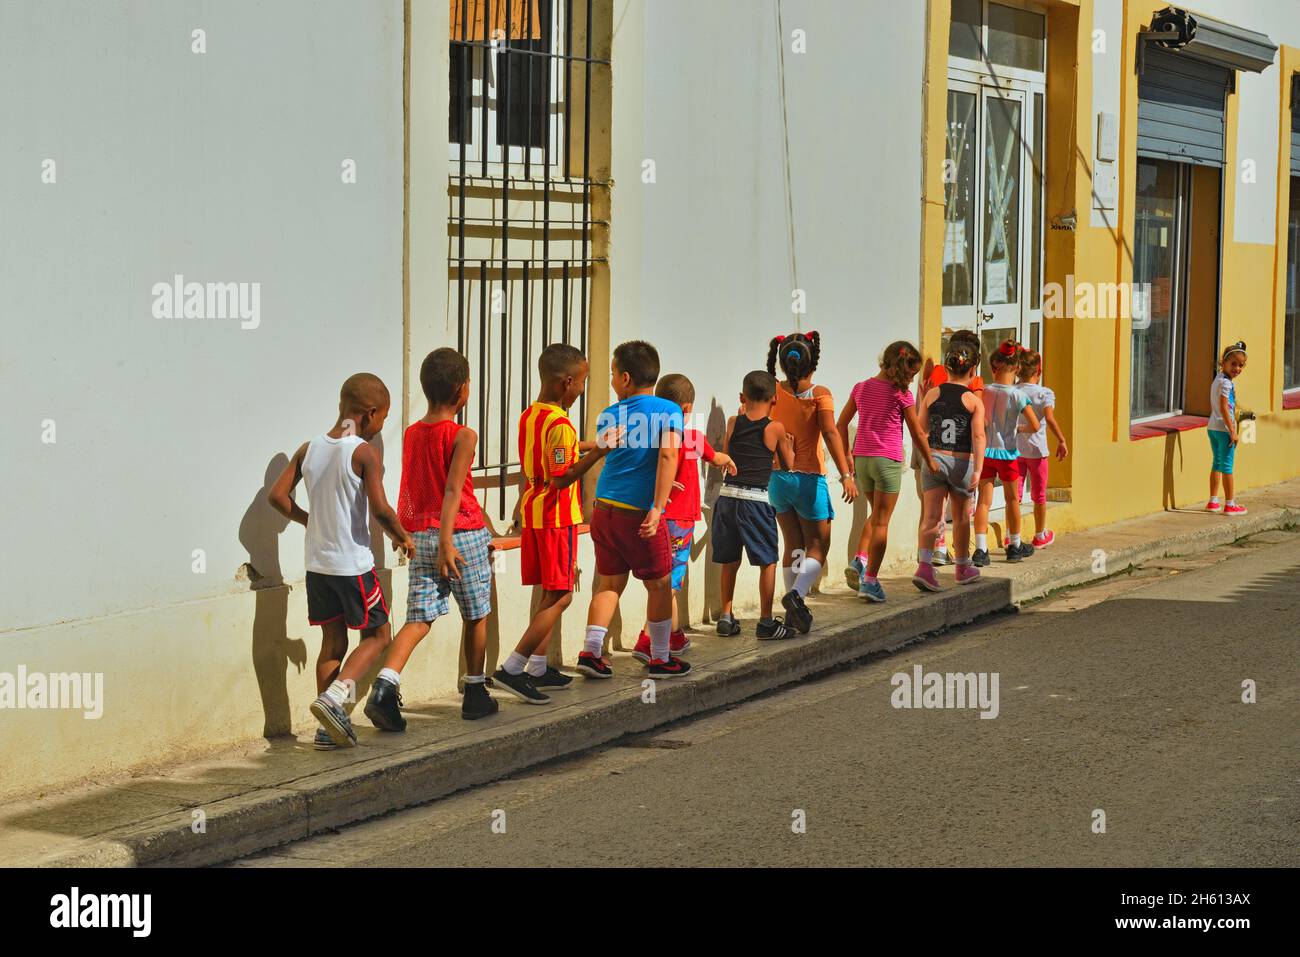 Street scene in Old Havana- First grade schoolchildren, La Habana (Havana), Habana, Cuba Stock Photo